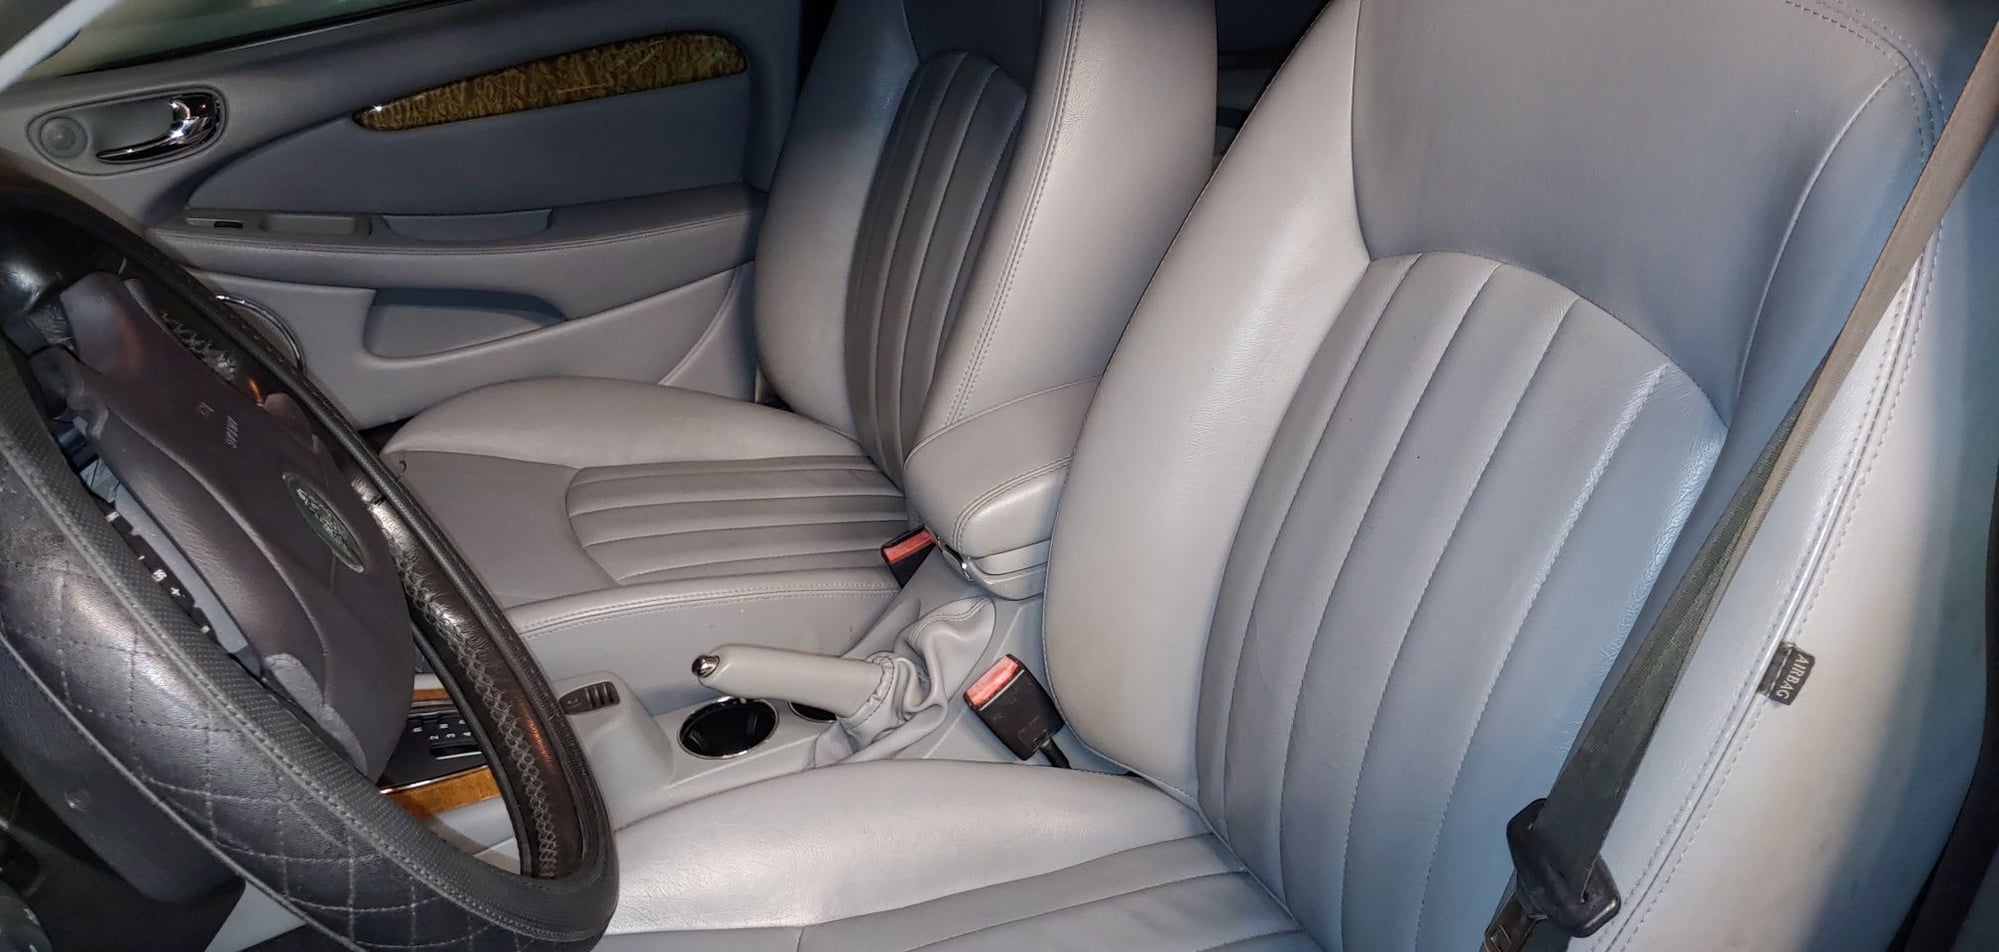 2004 Jaguar X-Type - Interior complete - Interior/Upholstery - $300 - Stockton, CA 95205, United States